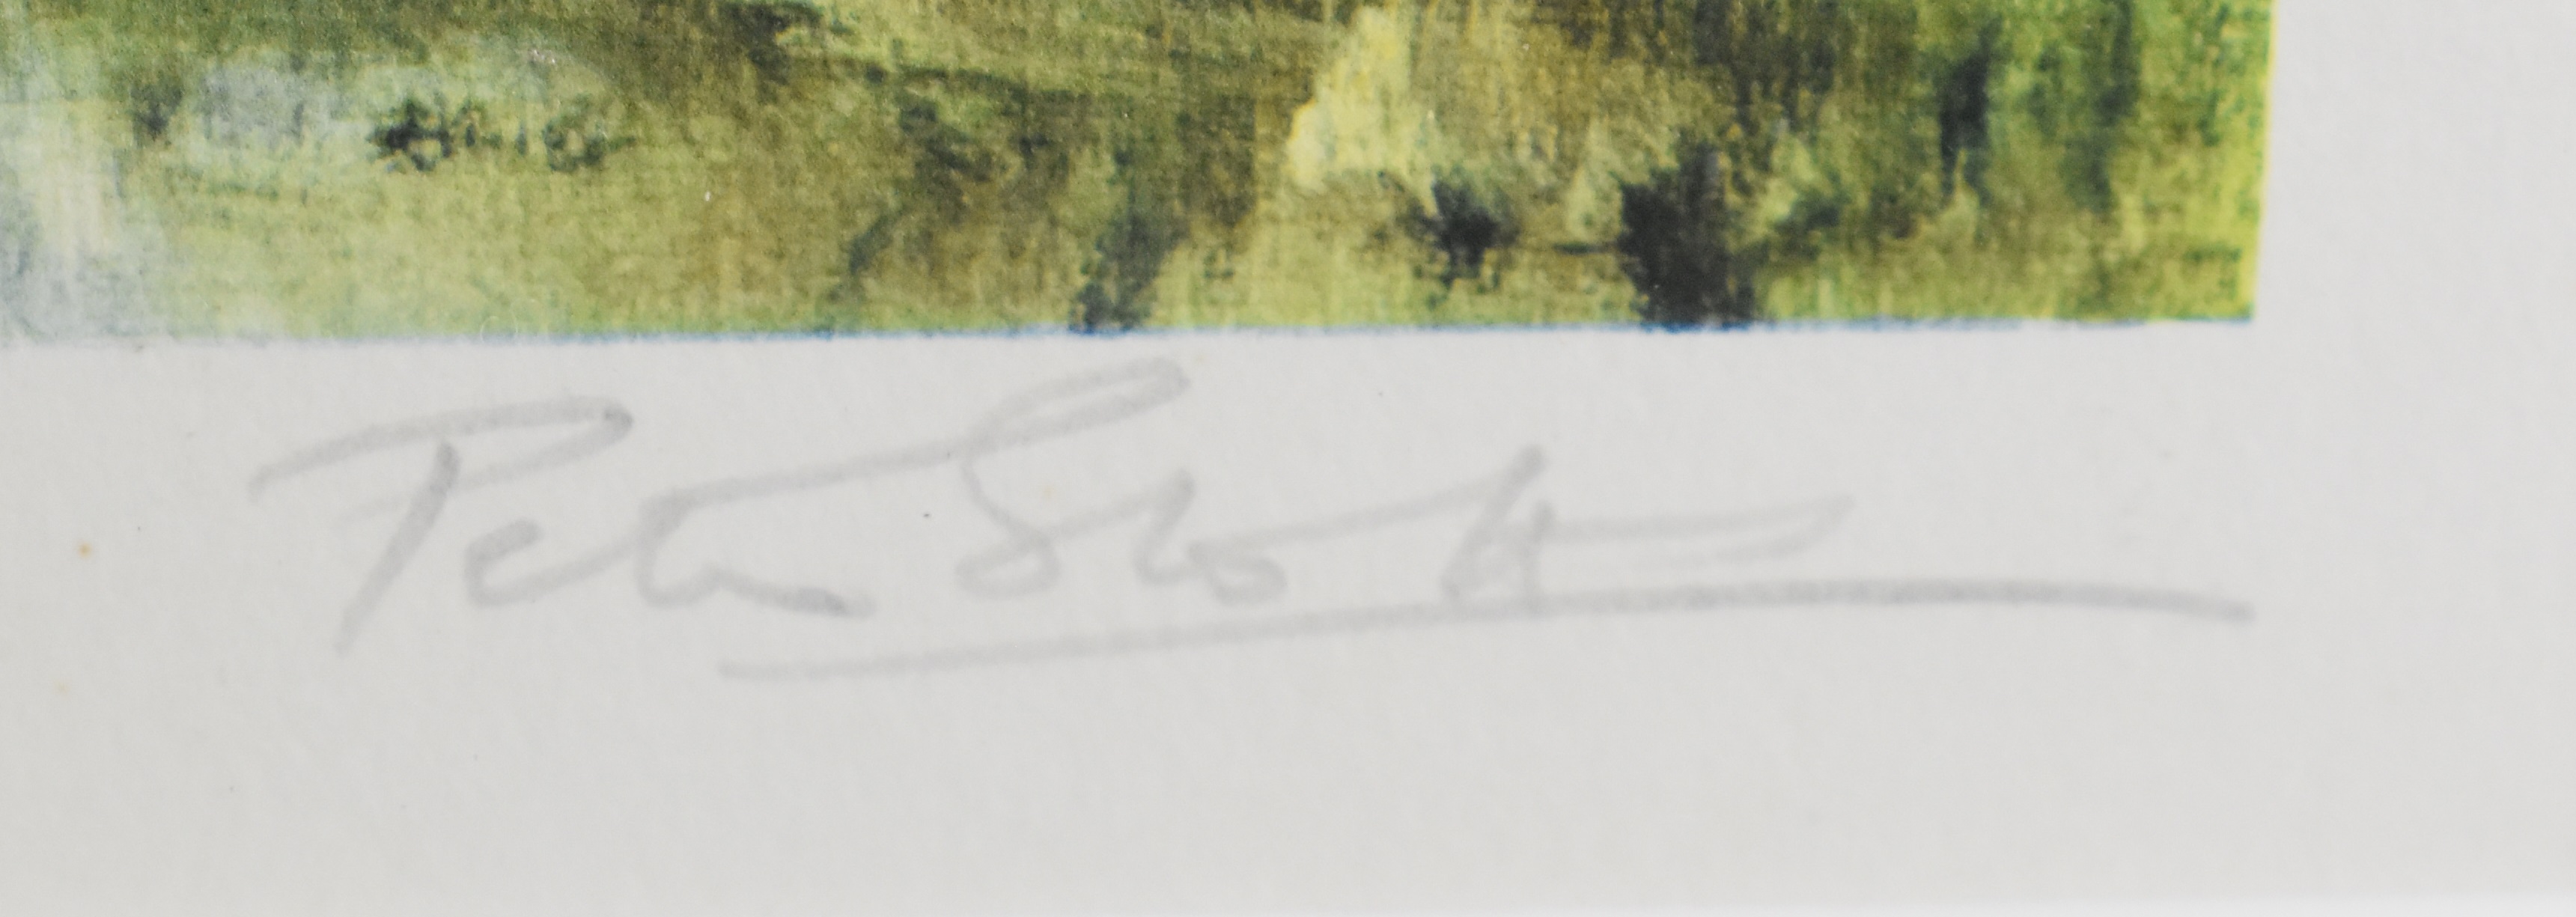 Peter Scott (1909-1989) signed print of geese in flight, 38 x 55cm, in oak frame - Image 3 of 7